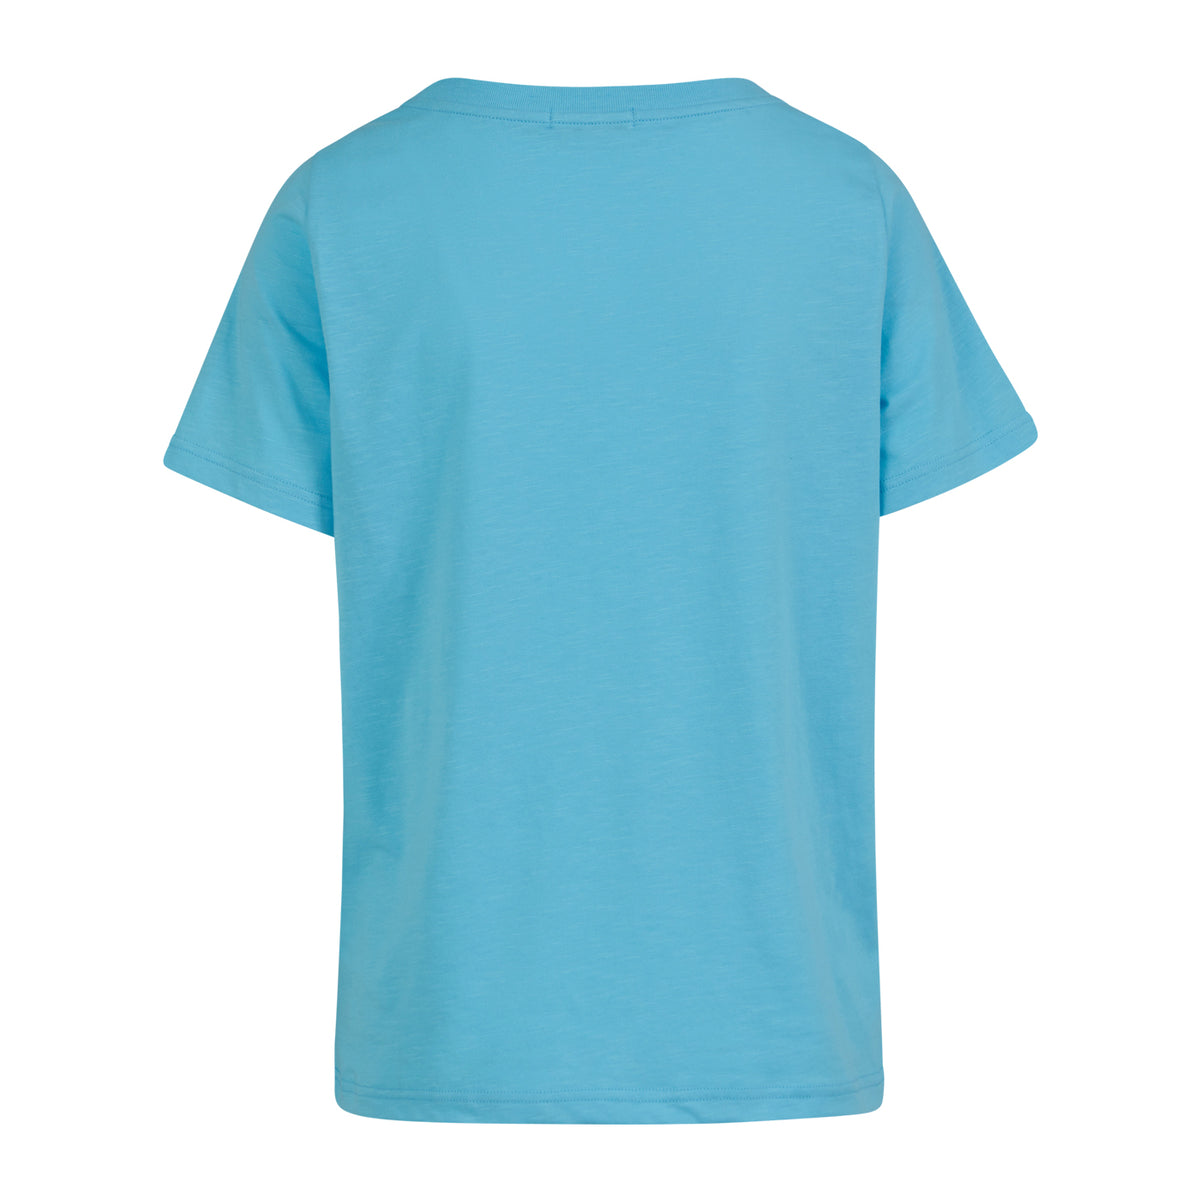 Coster Copenhagen Aqua Blue T-Shirt with Paint Mix Logo, 241-1144